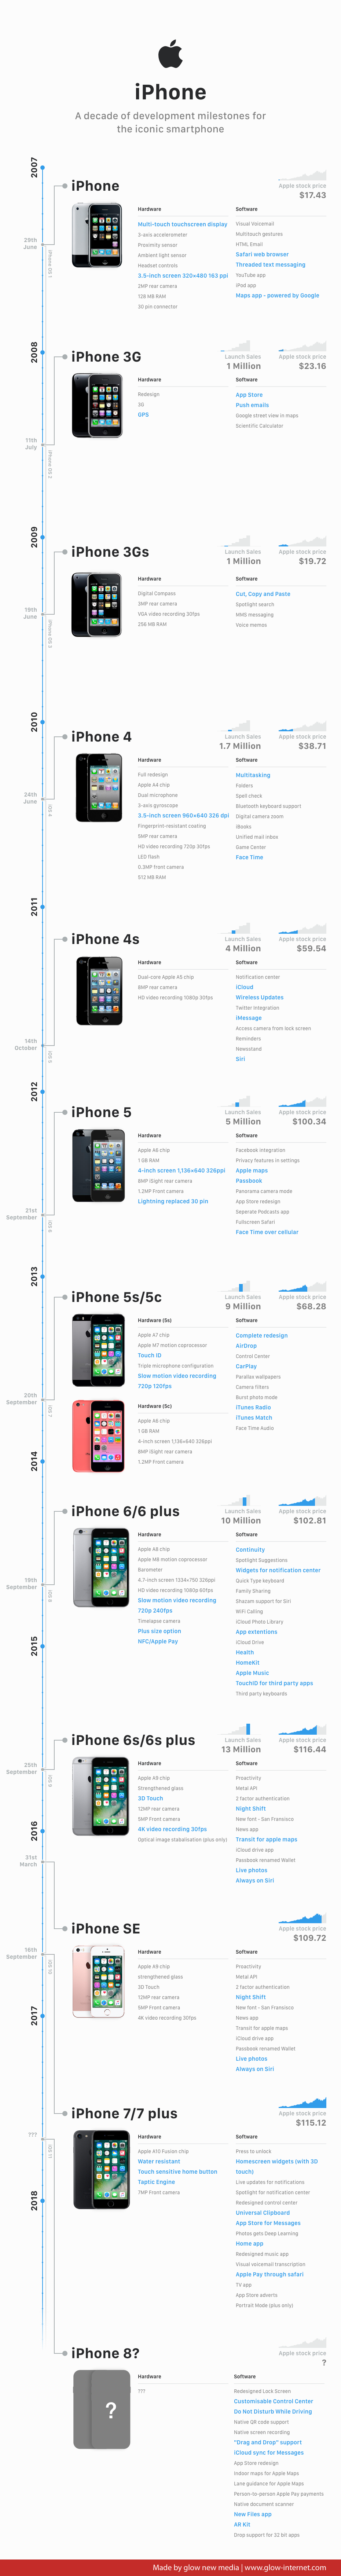 iPhone - A decade of development milestones for the iconic smartphone